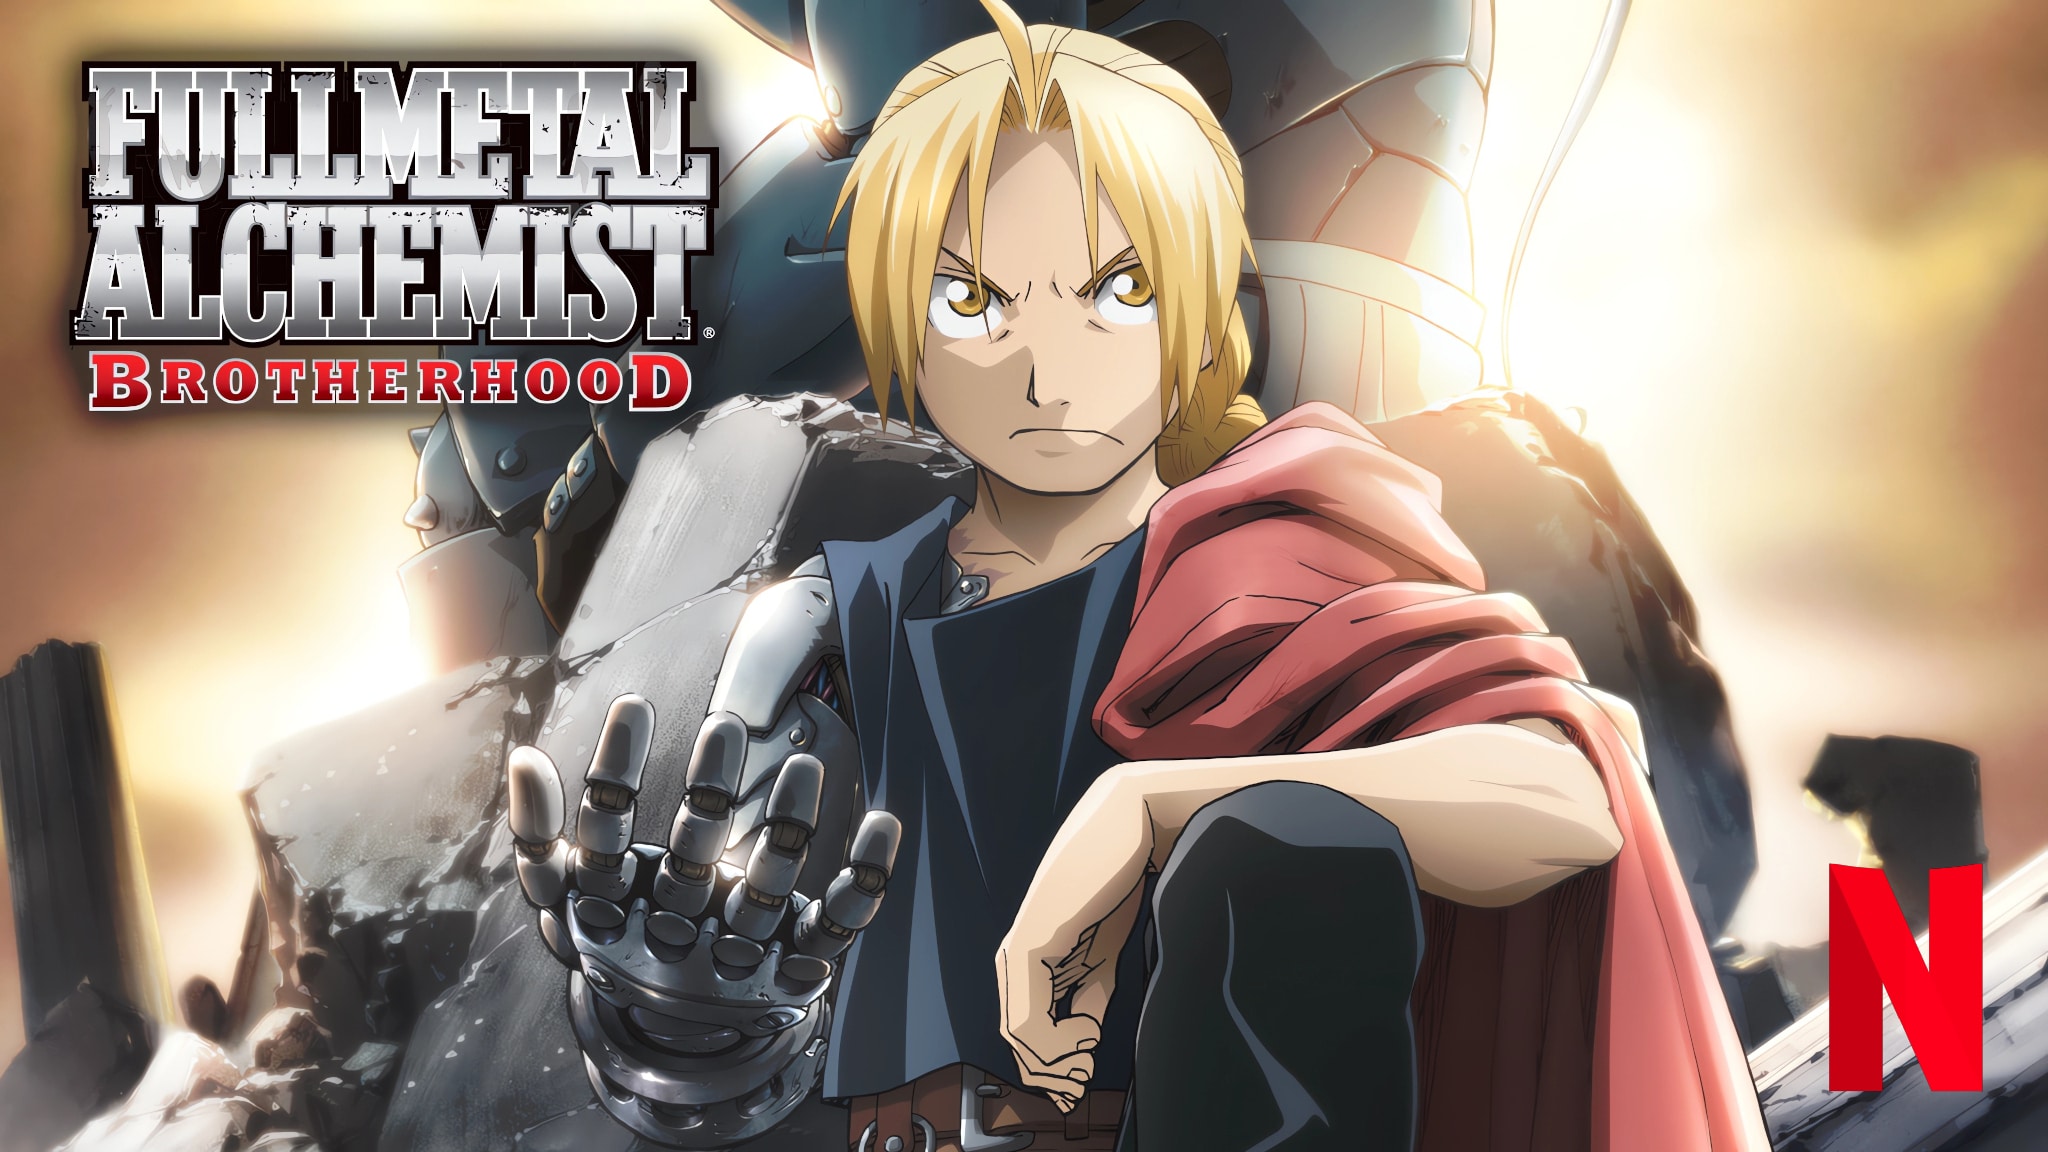 Annonce de la date de sortie en France sur Netflix de lanime Fullmetal Alchemist Brotherhood